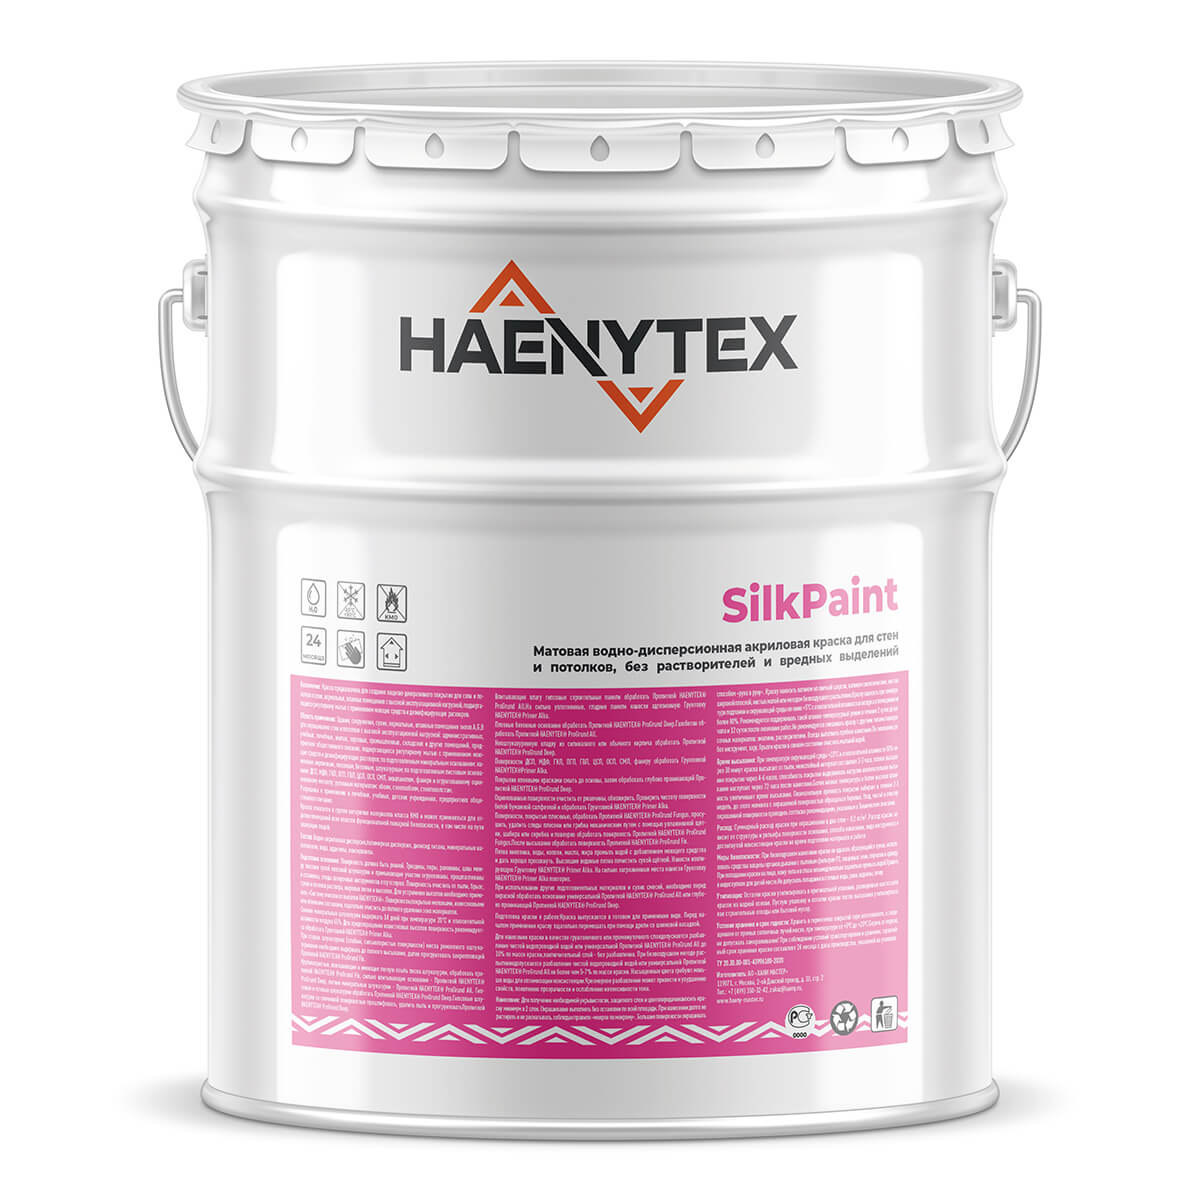 HAENYTEX® SilkPaint